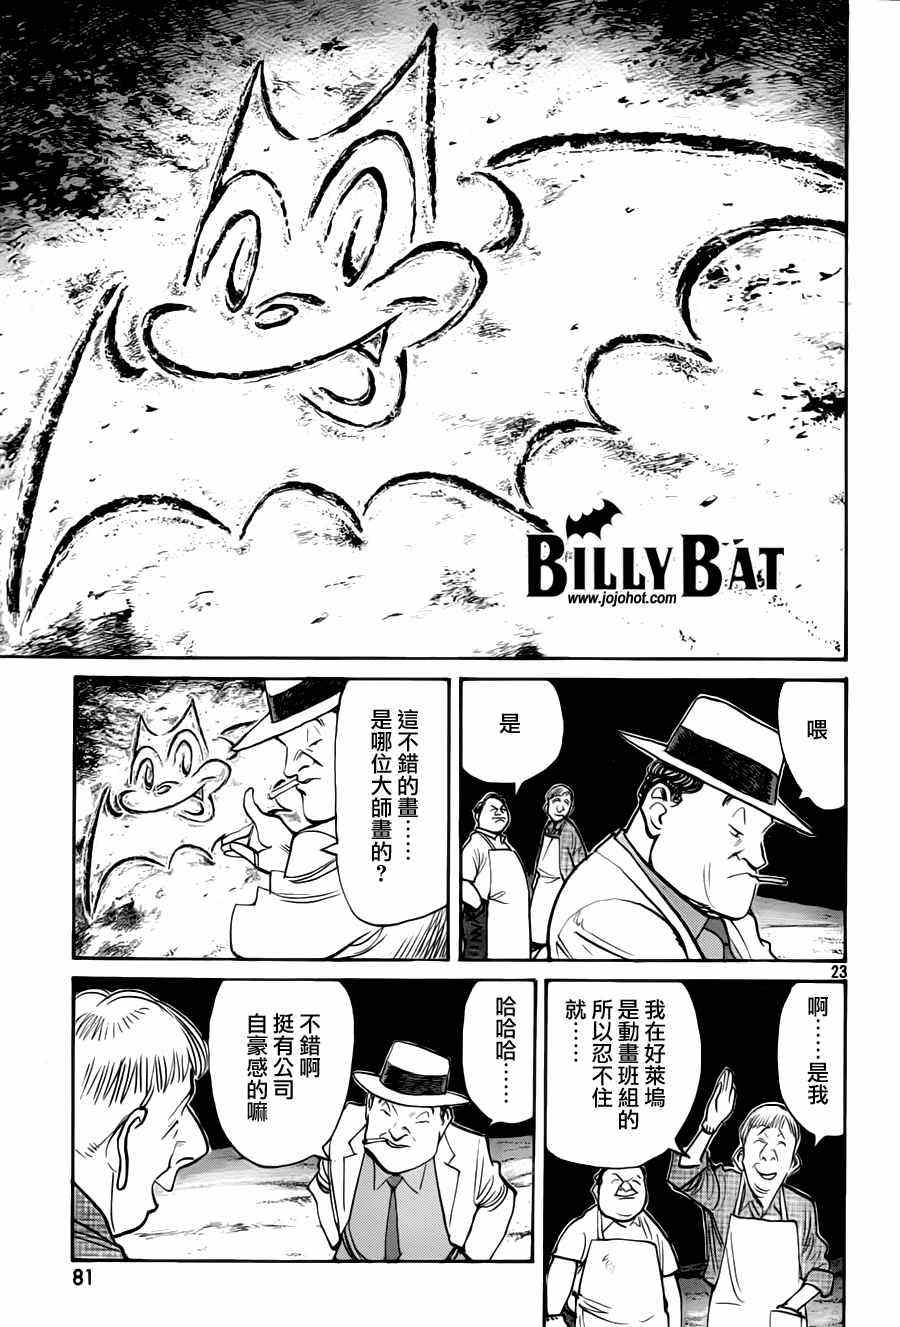 Billy_Bat - 第74話 - 3